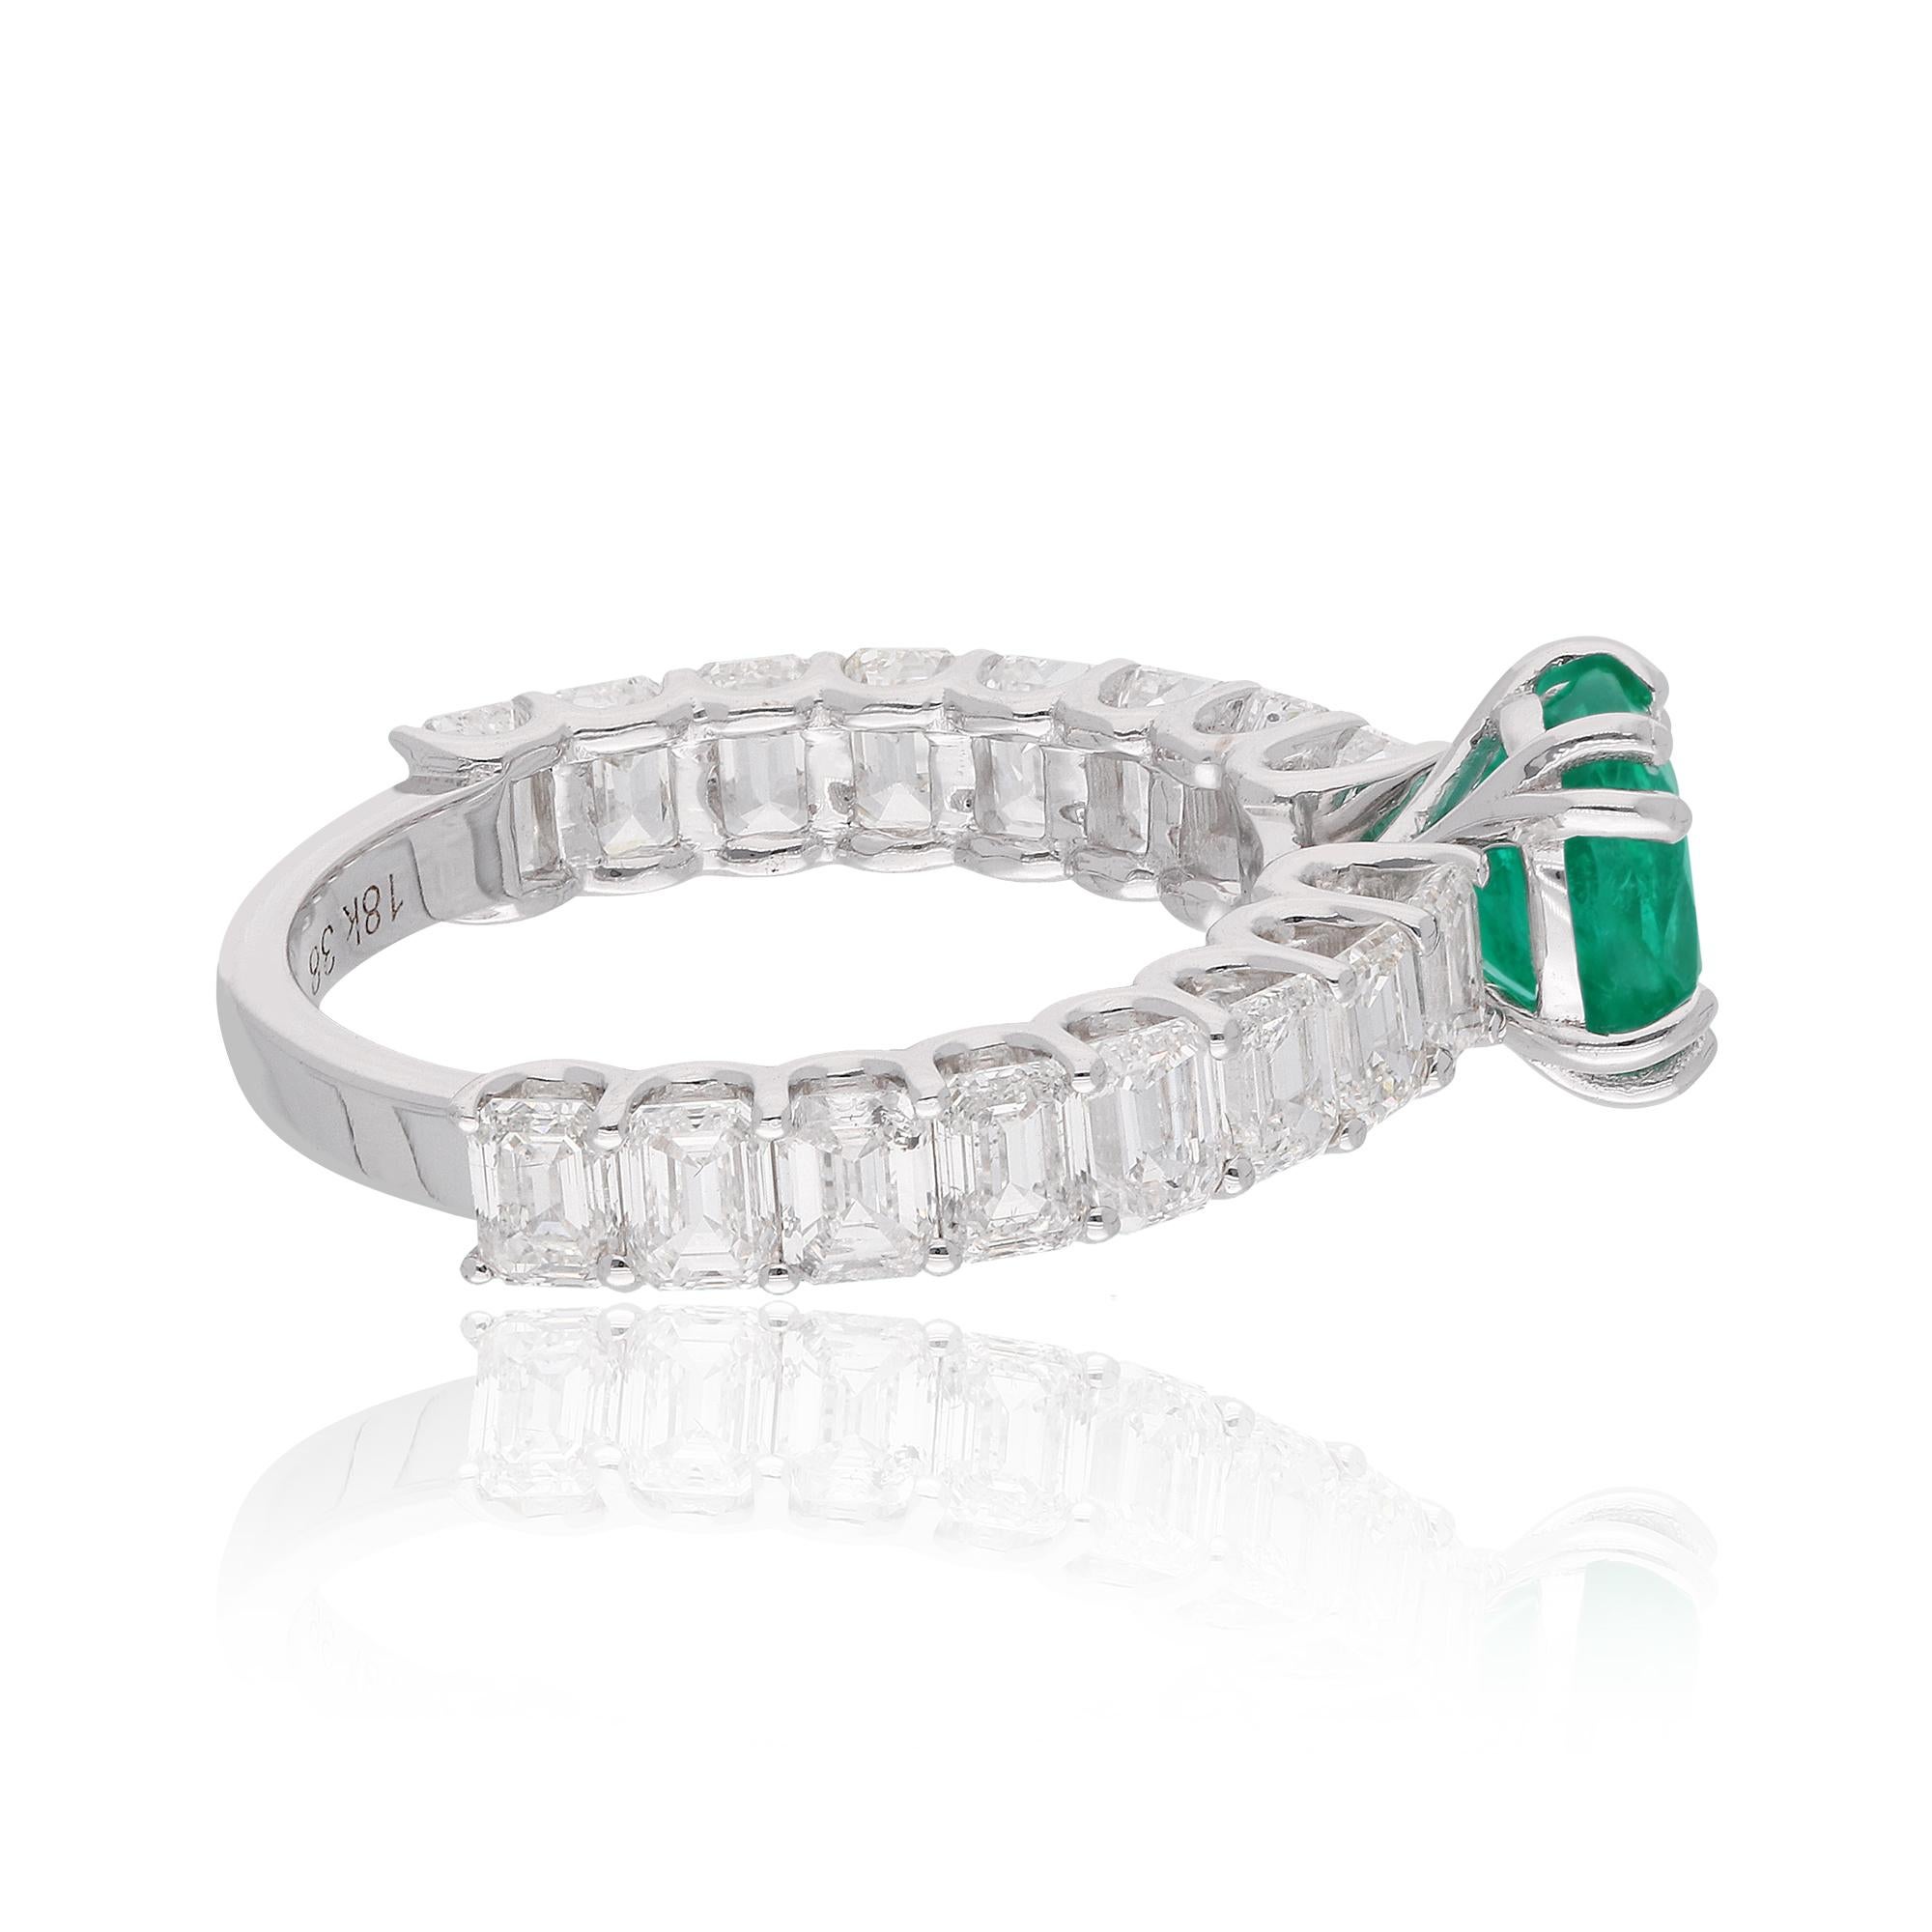 For Sale:  Natural Emerald Gemstone Ring Emerald Cut Diamond 18 Karat White Gold Jewelry 3